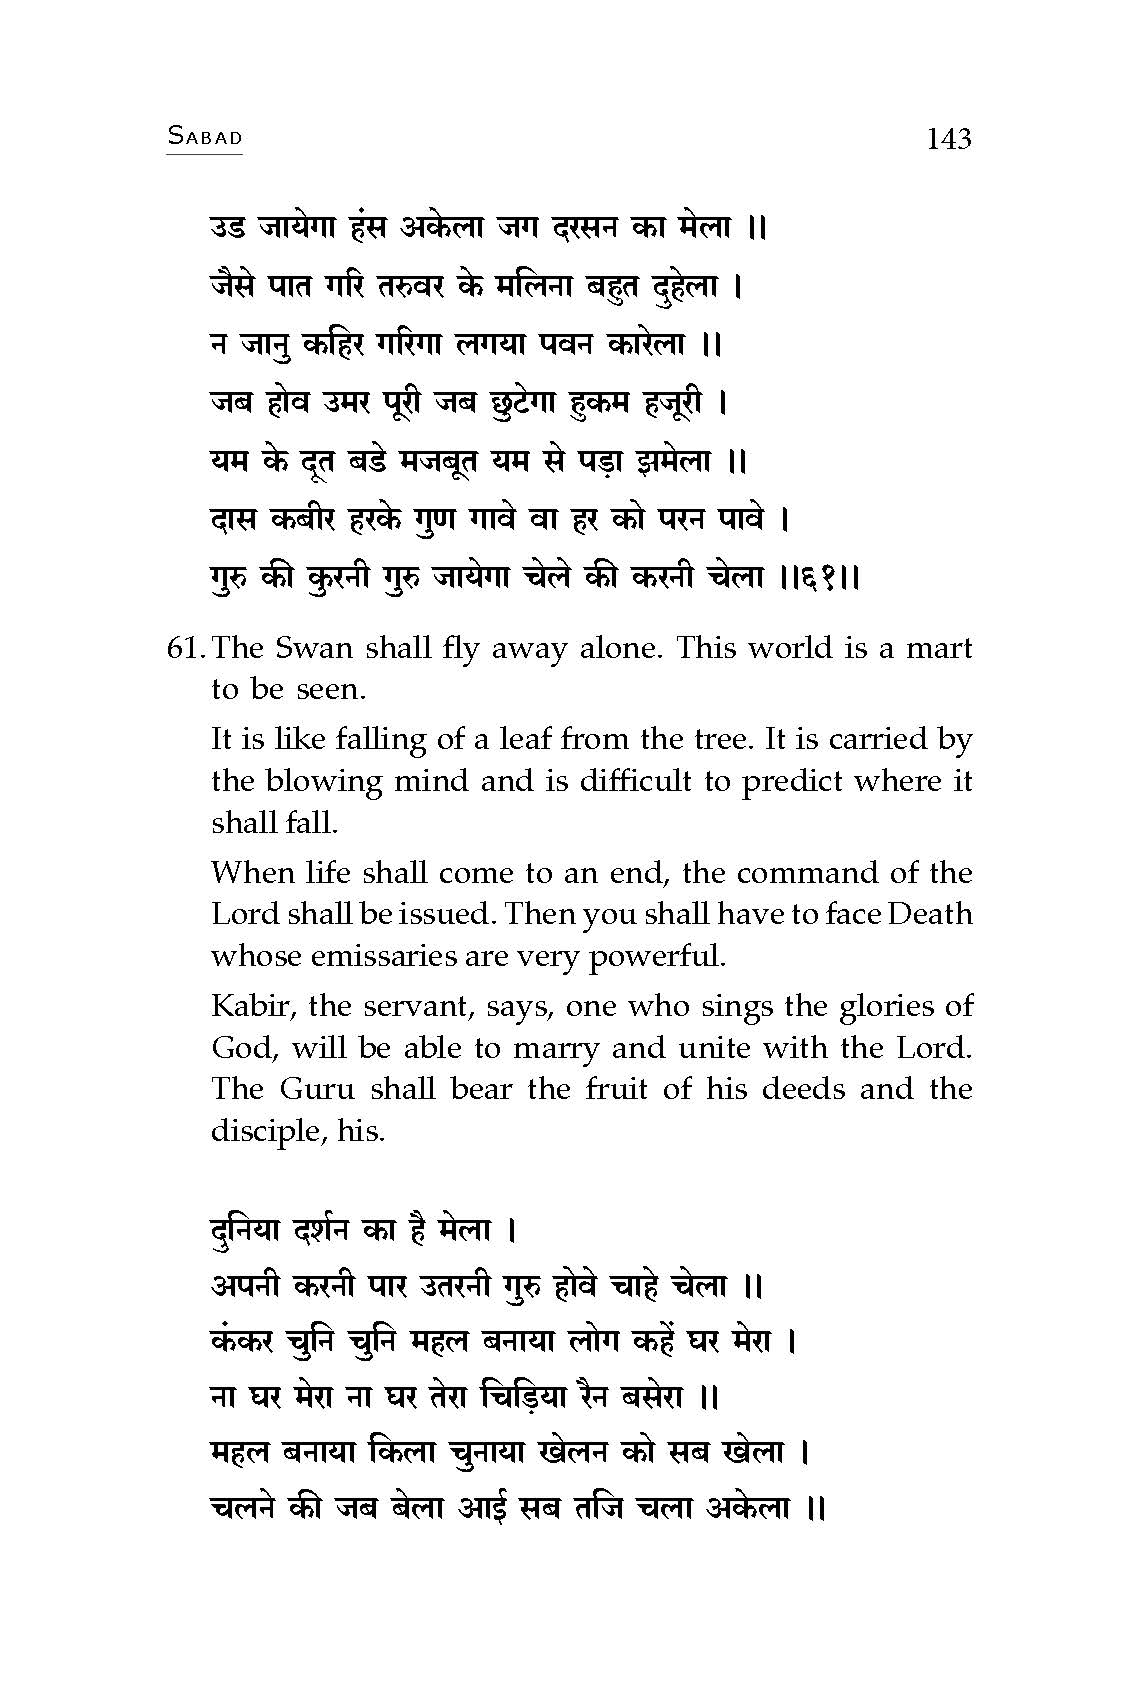 The Mystic Wisdom of Kabir